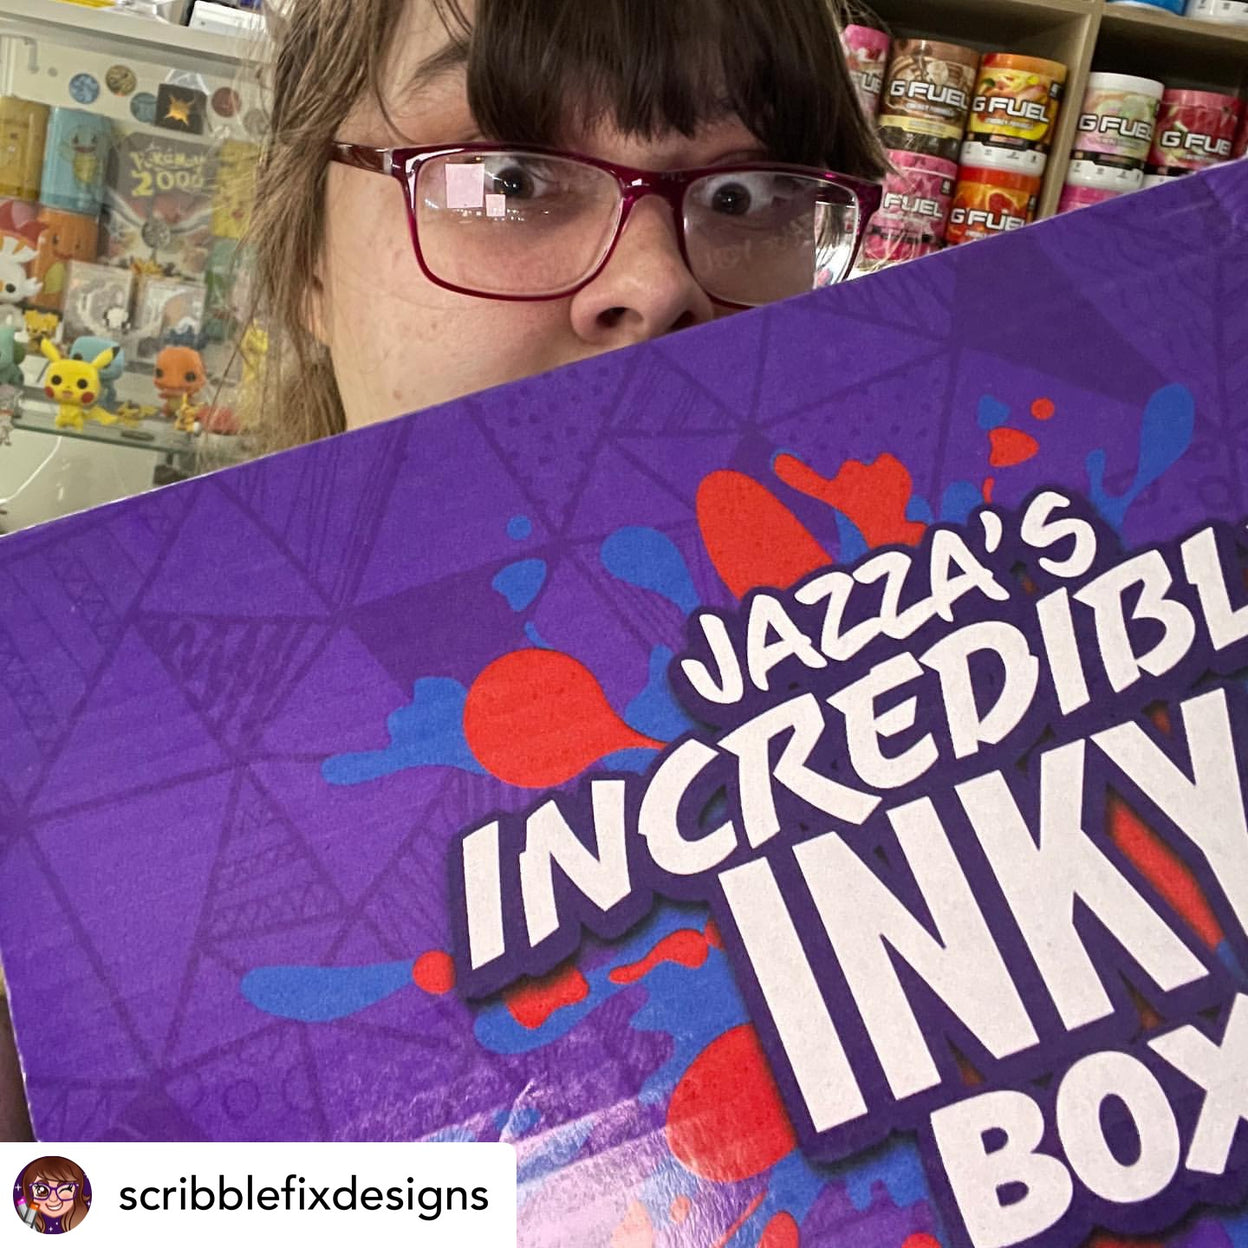 Jazza’s Incredible Inky Box